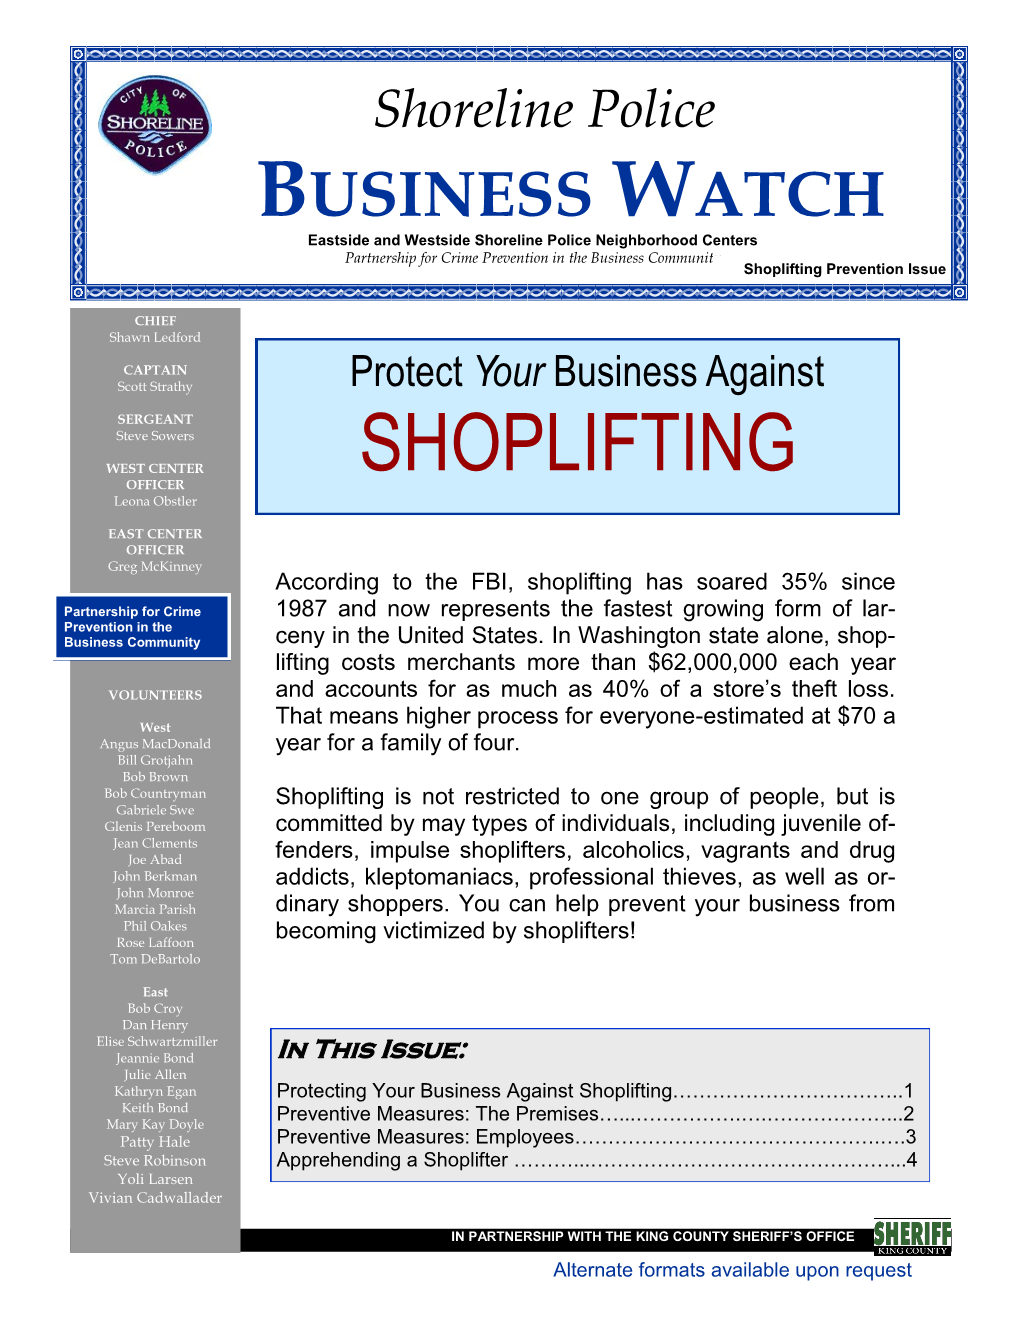 Shoplifting3rd Prevention Quarter 2005 Issue